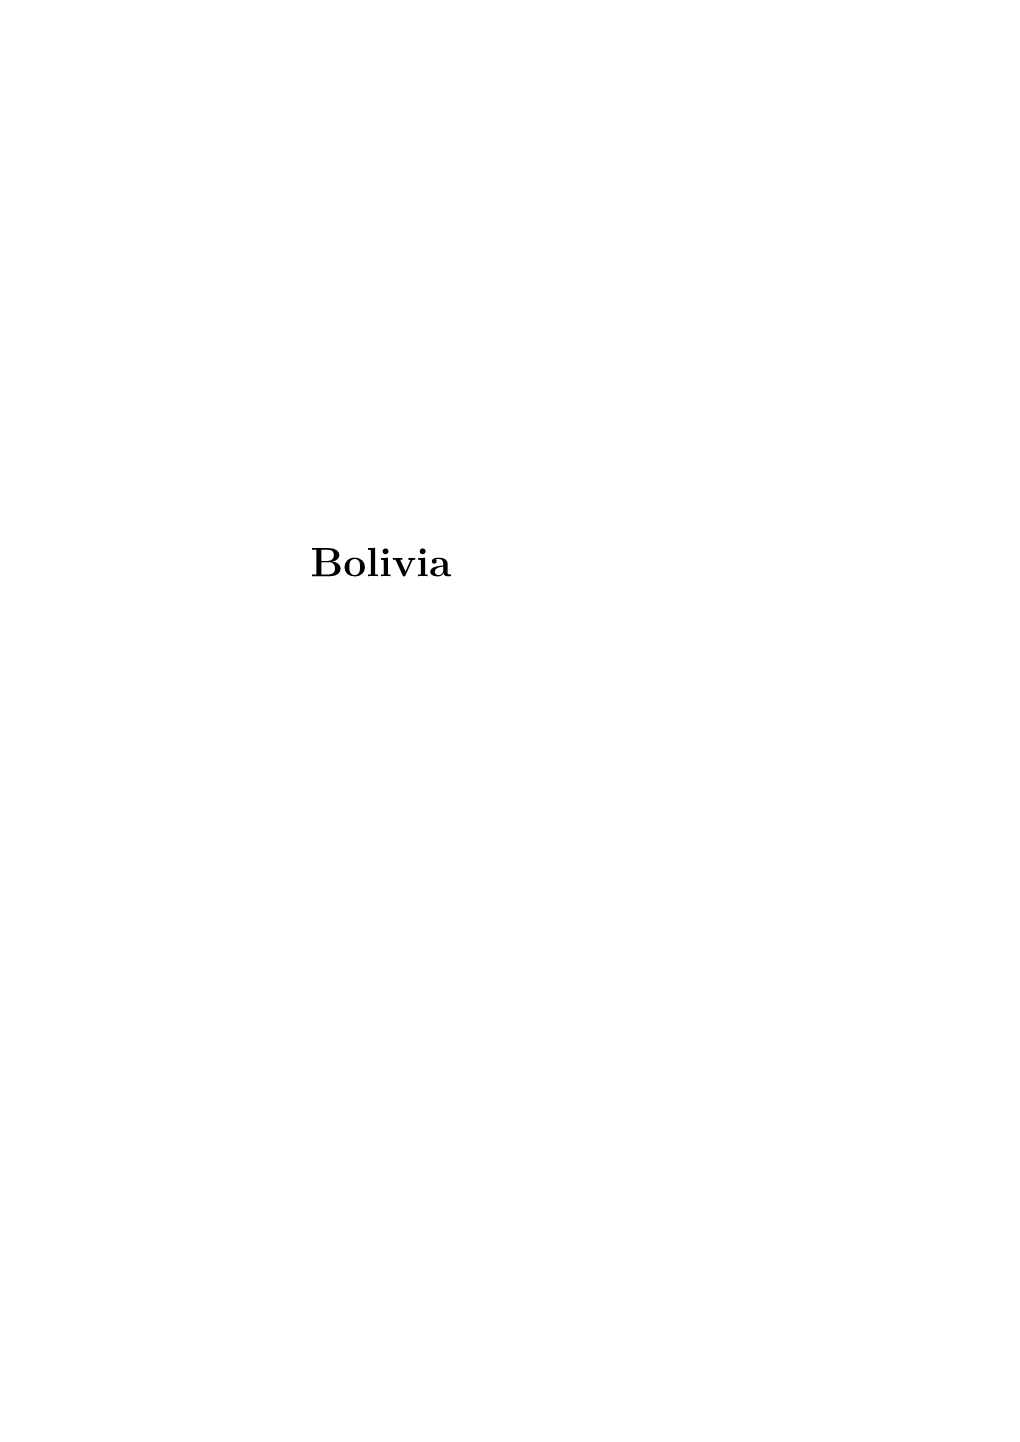 Ethnicity in Bolivia